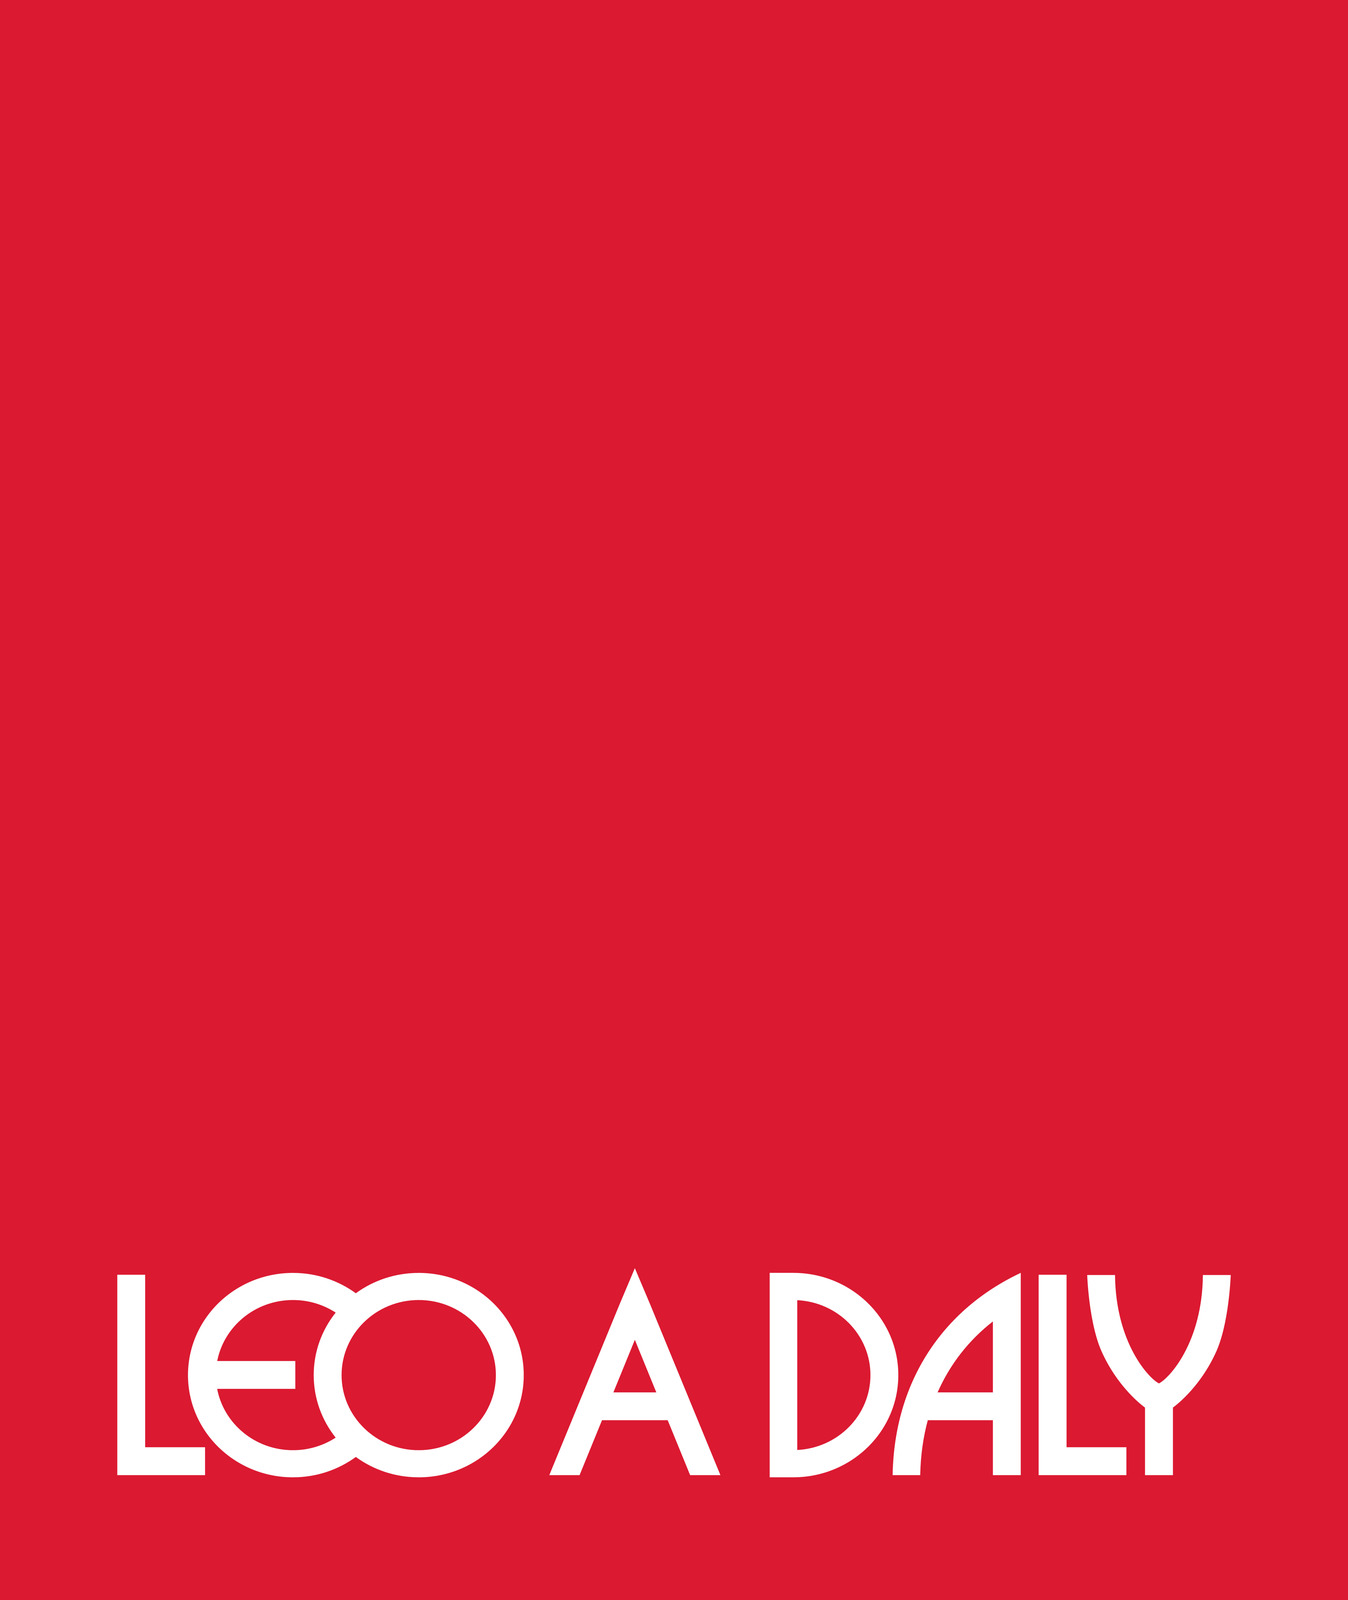 Leo Daly logo